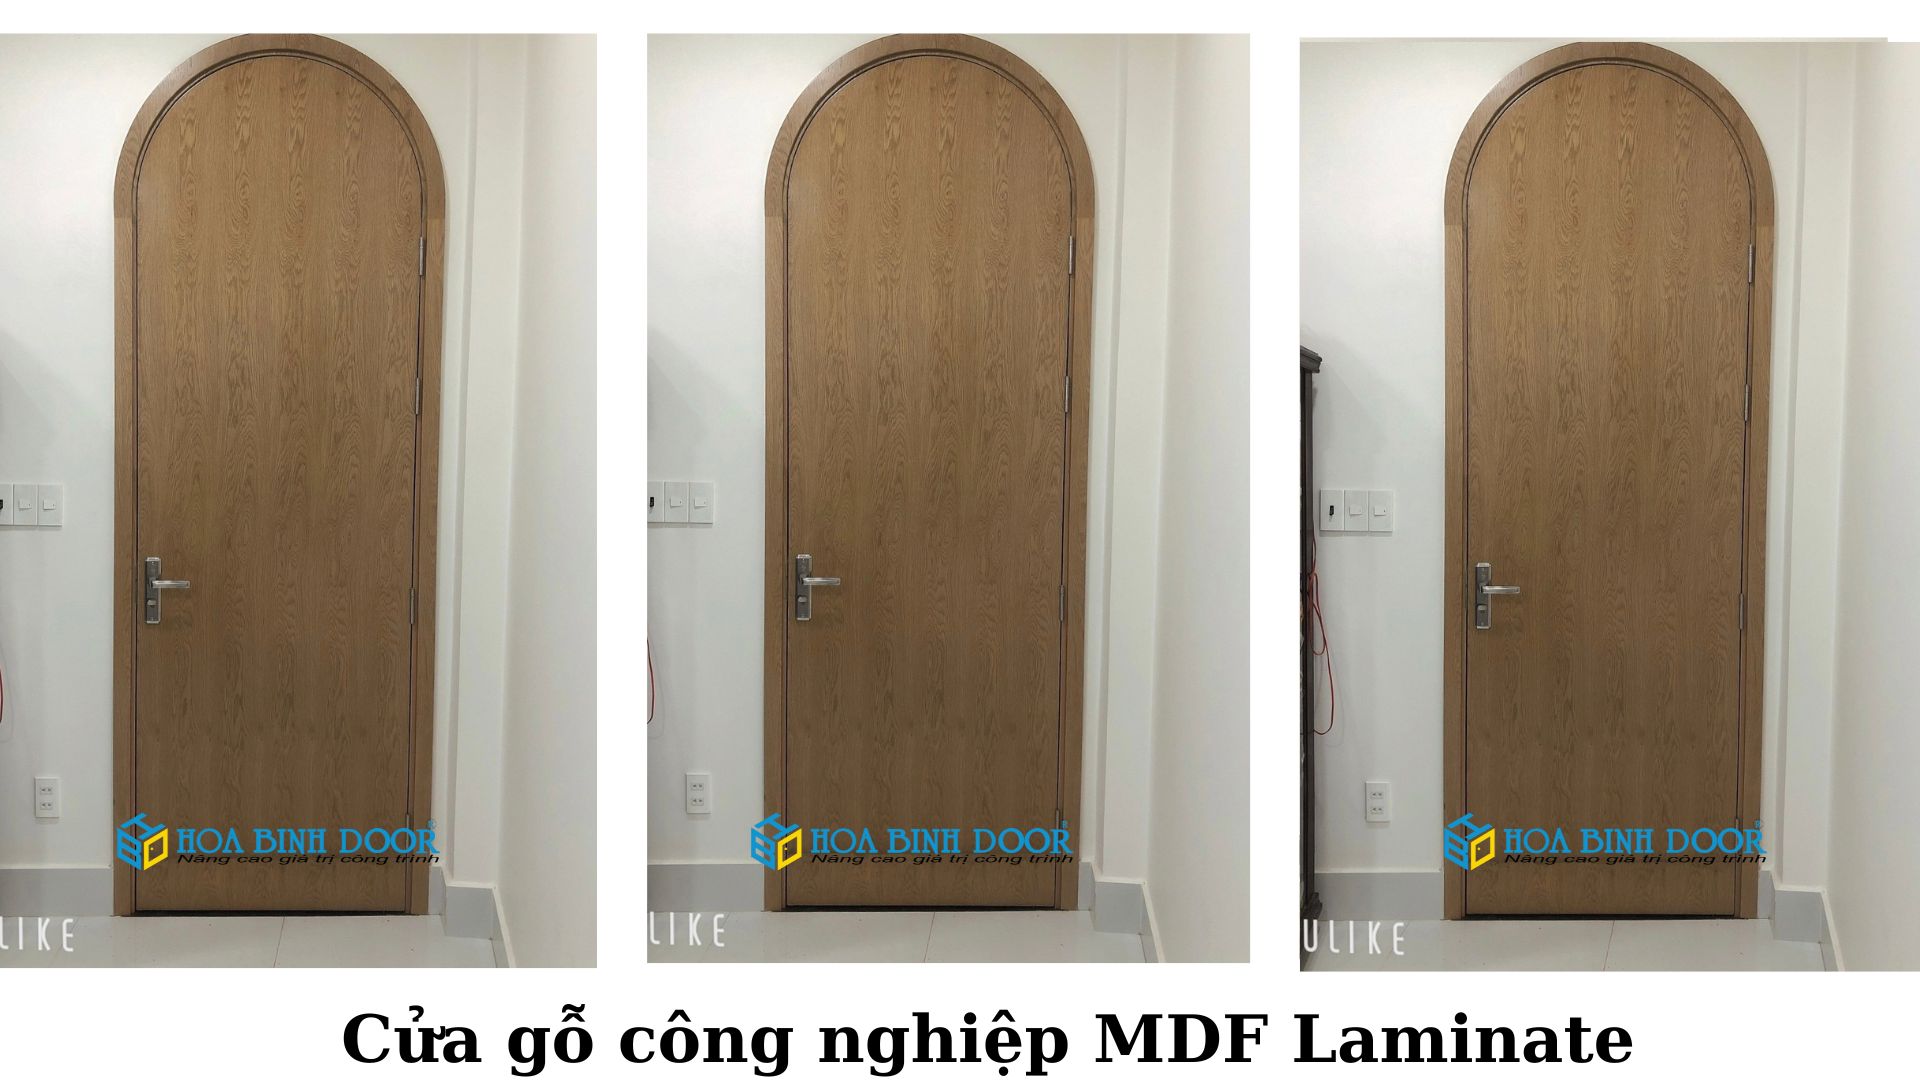 Báo giá cửa gỗ MDF Laminate